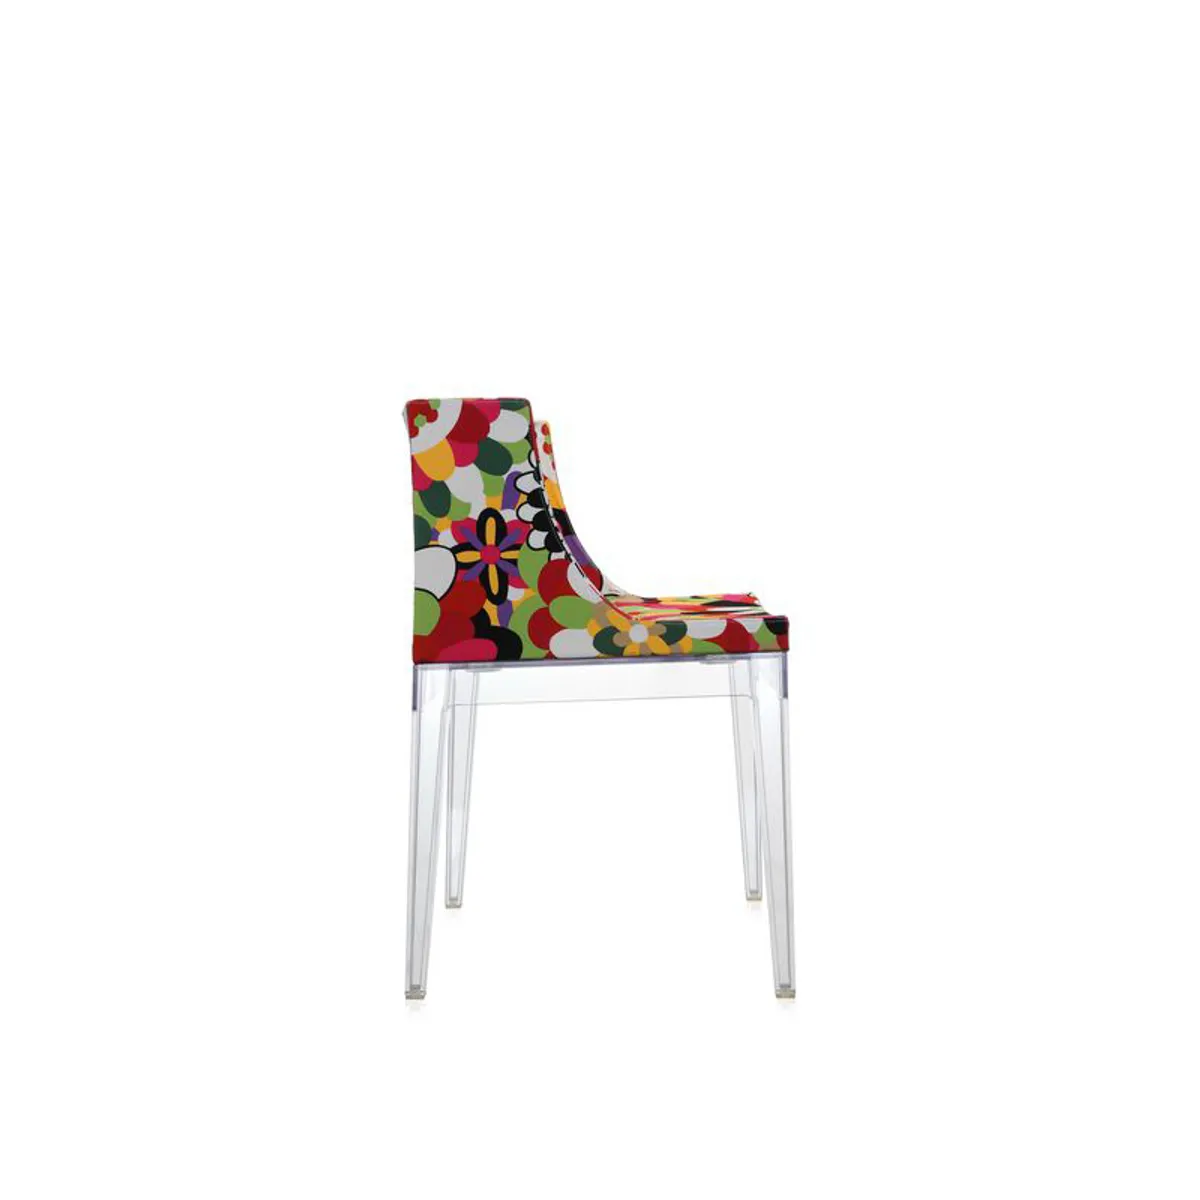 Mademoiselle Chair Redtones Verey 010